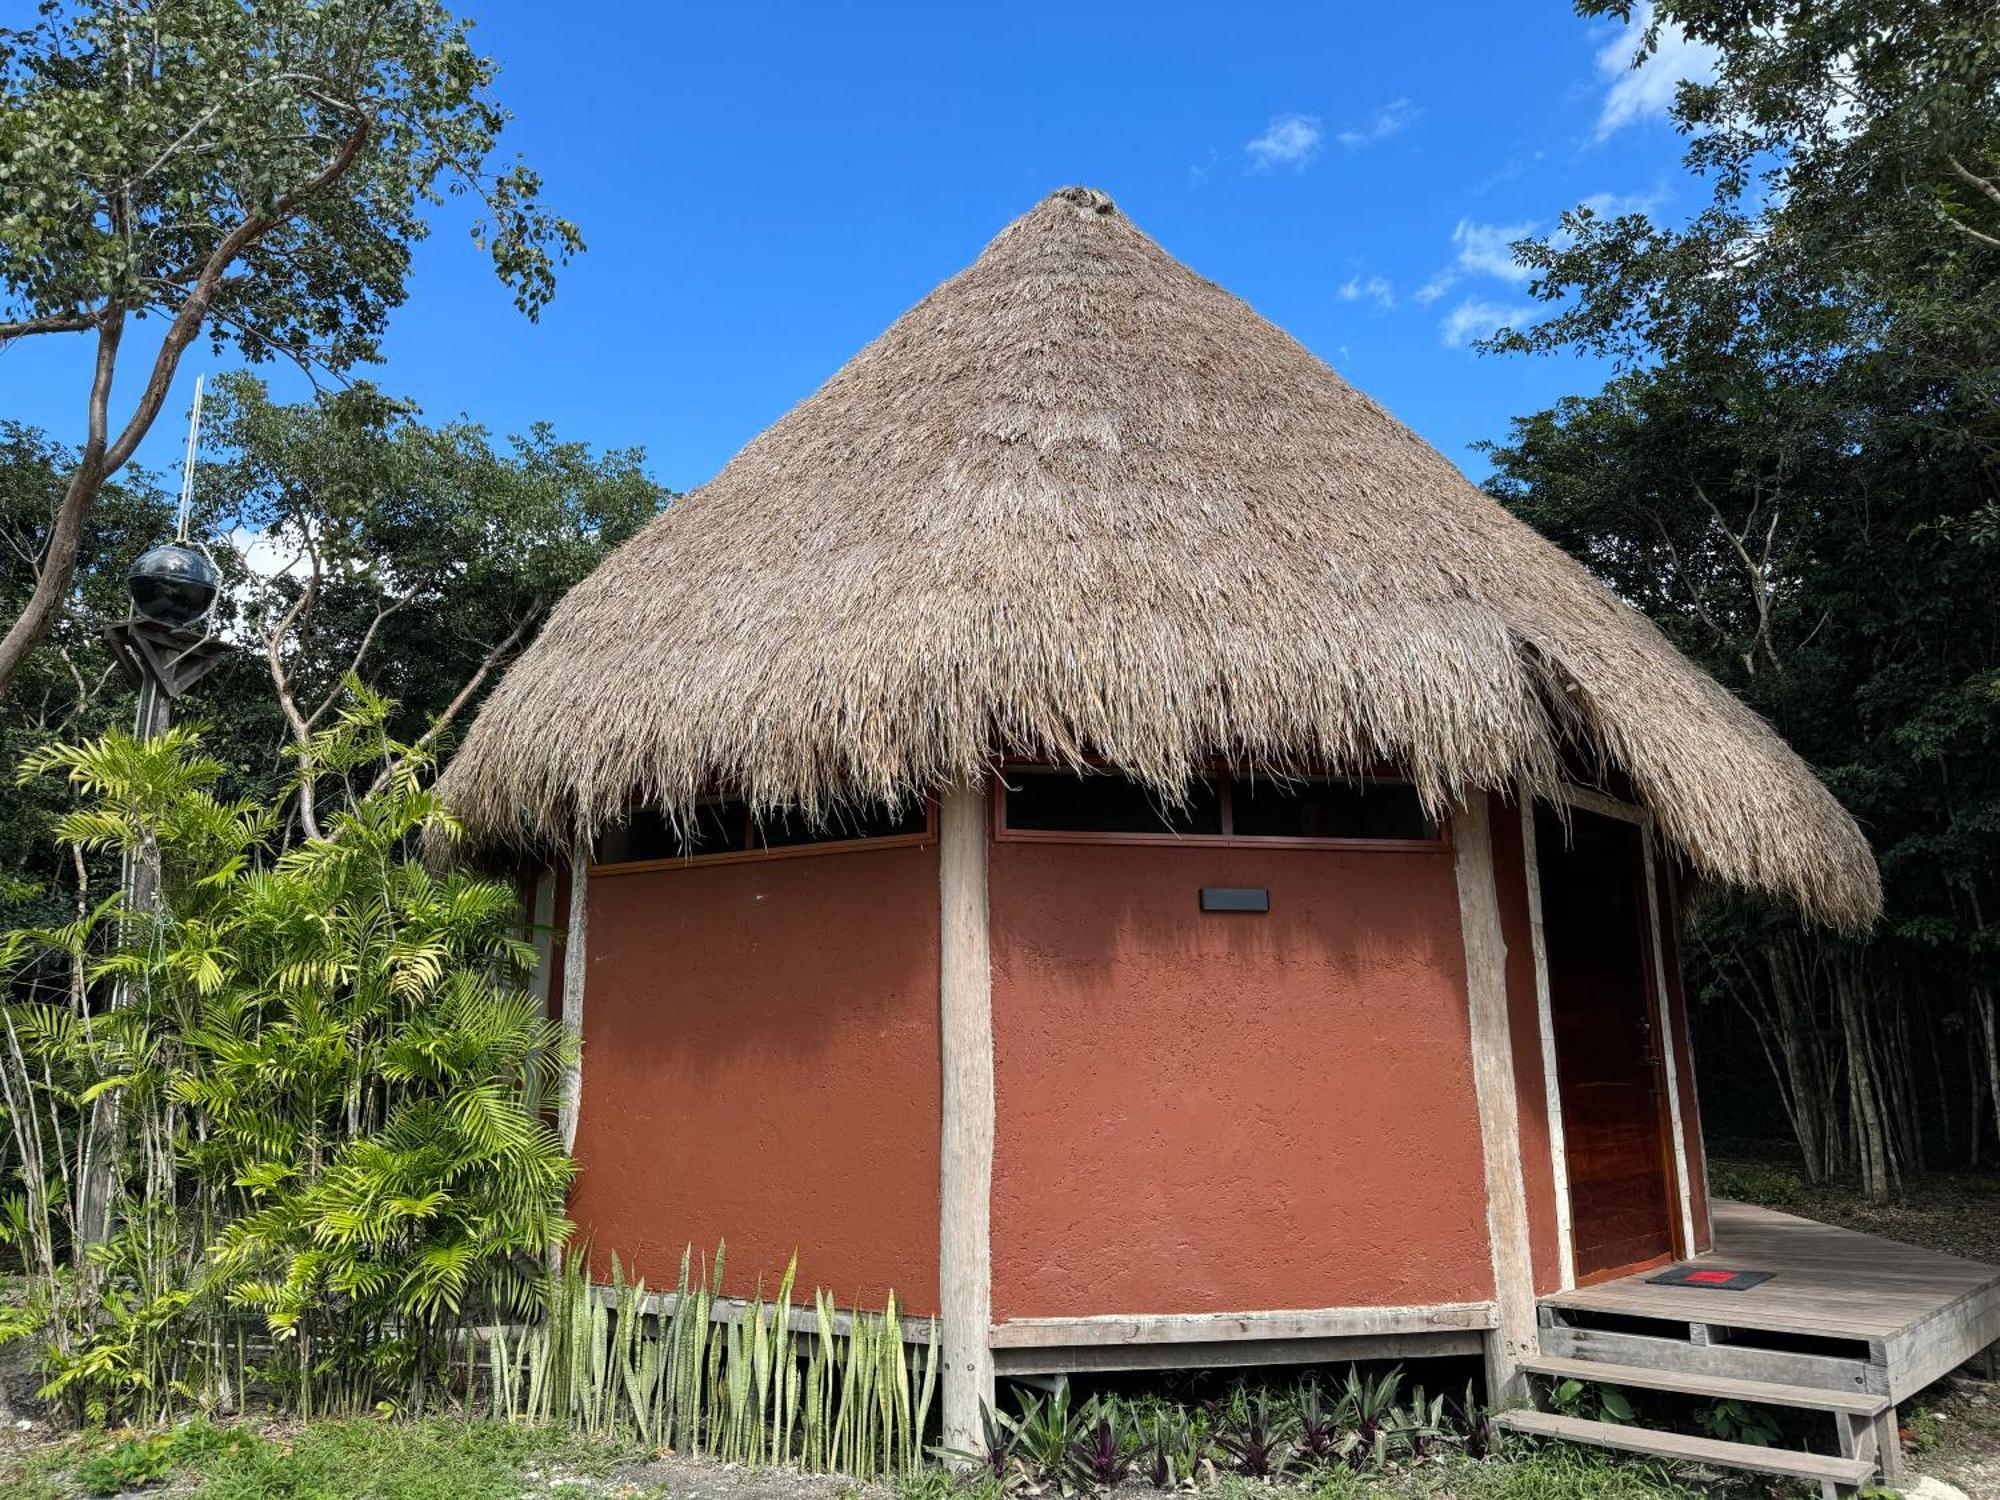 Casa Kaan Calakmul 호텔 우쉬푸힐 외부 사진